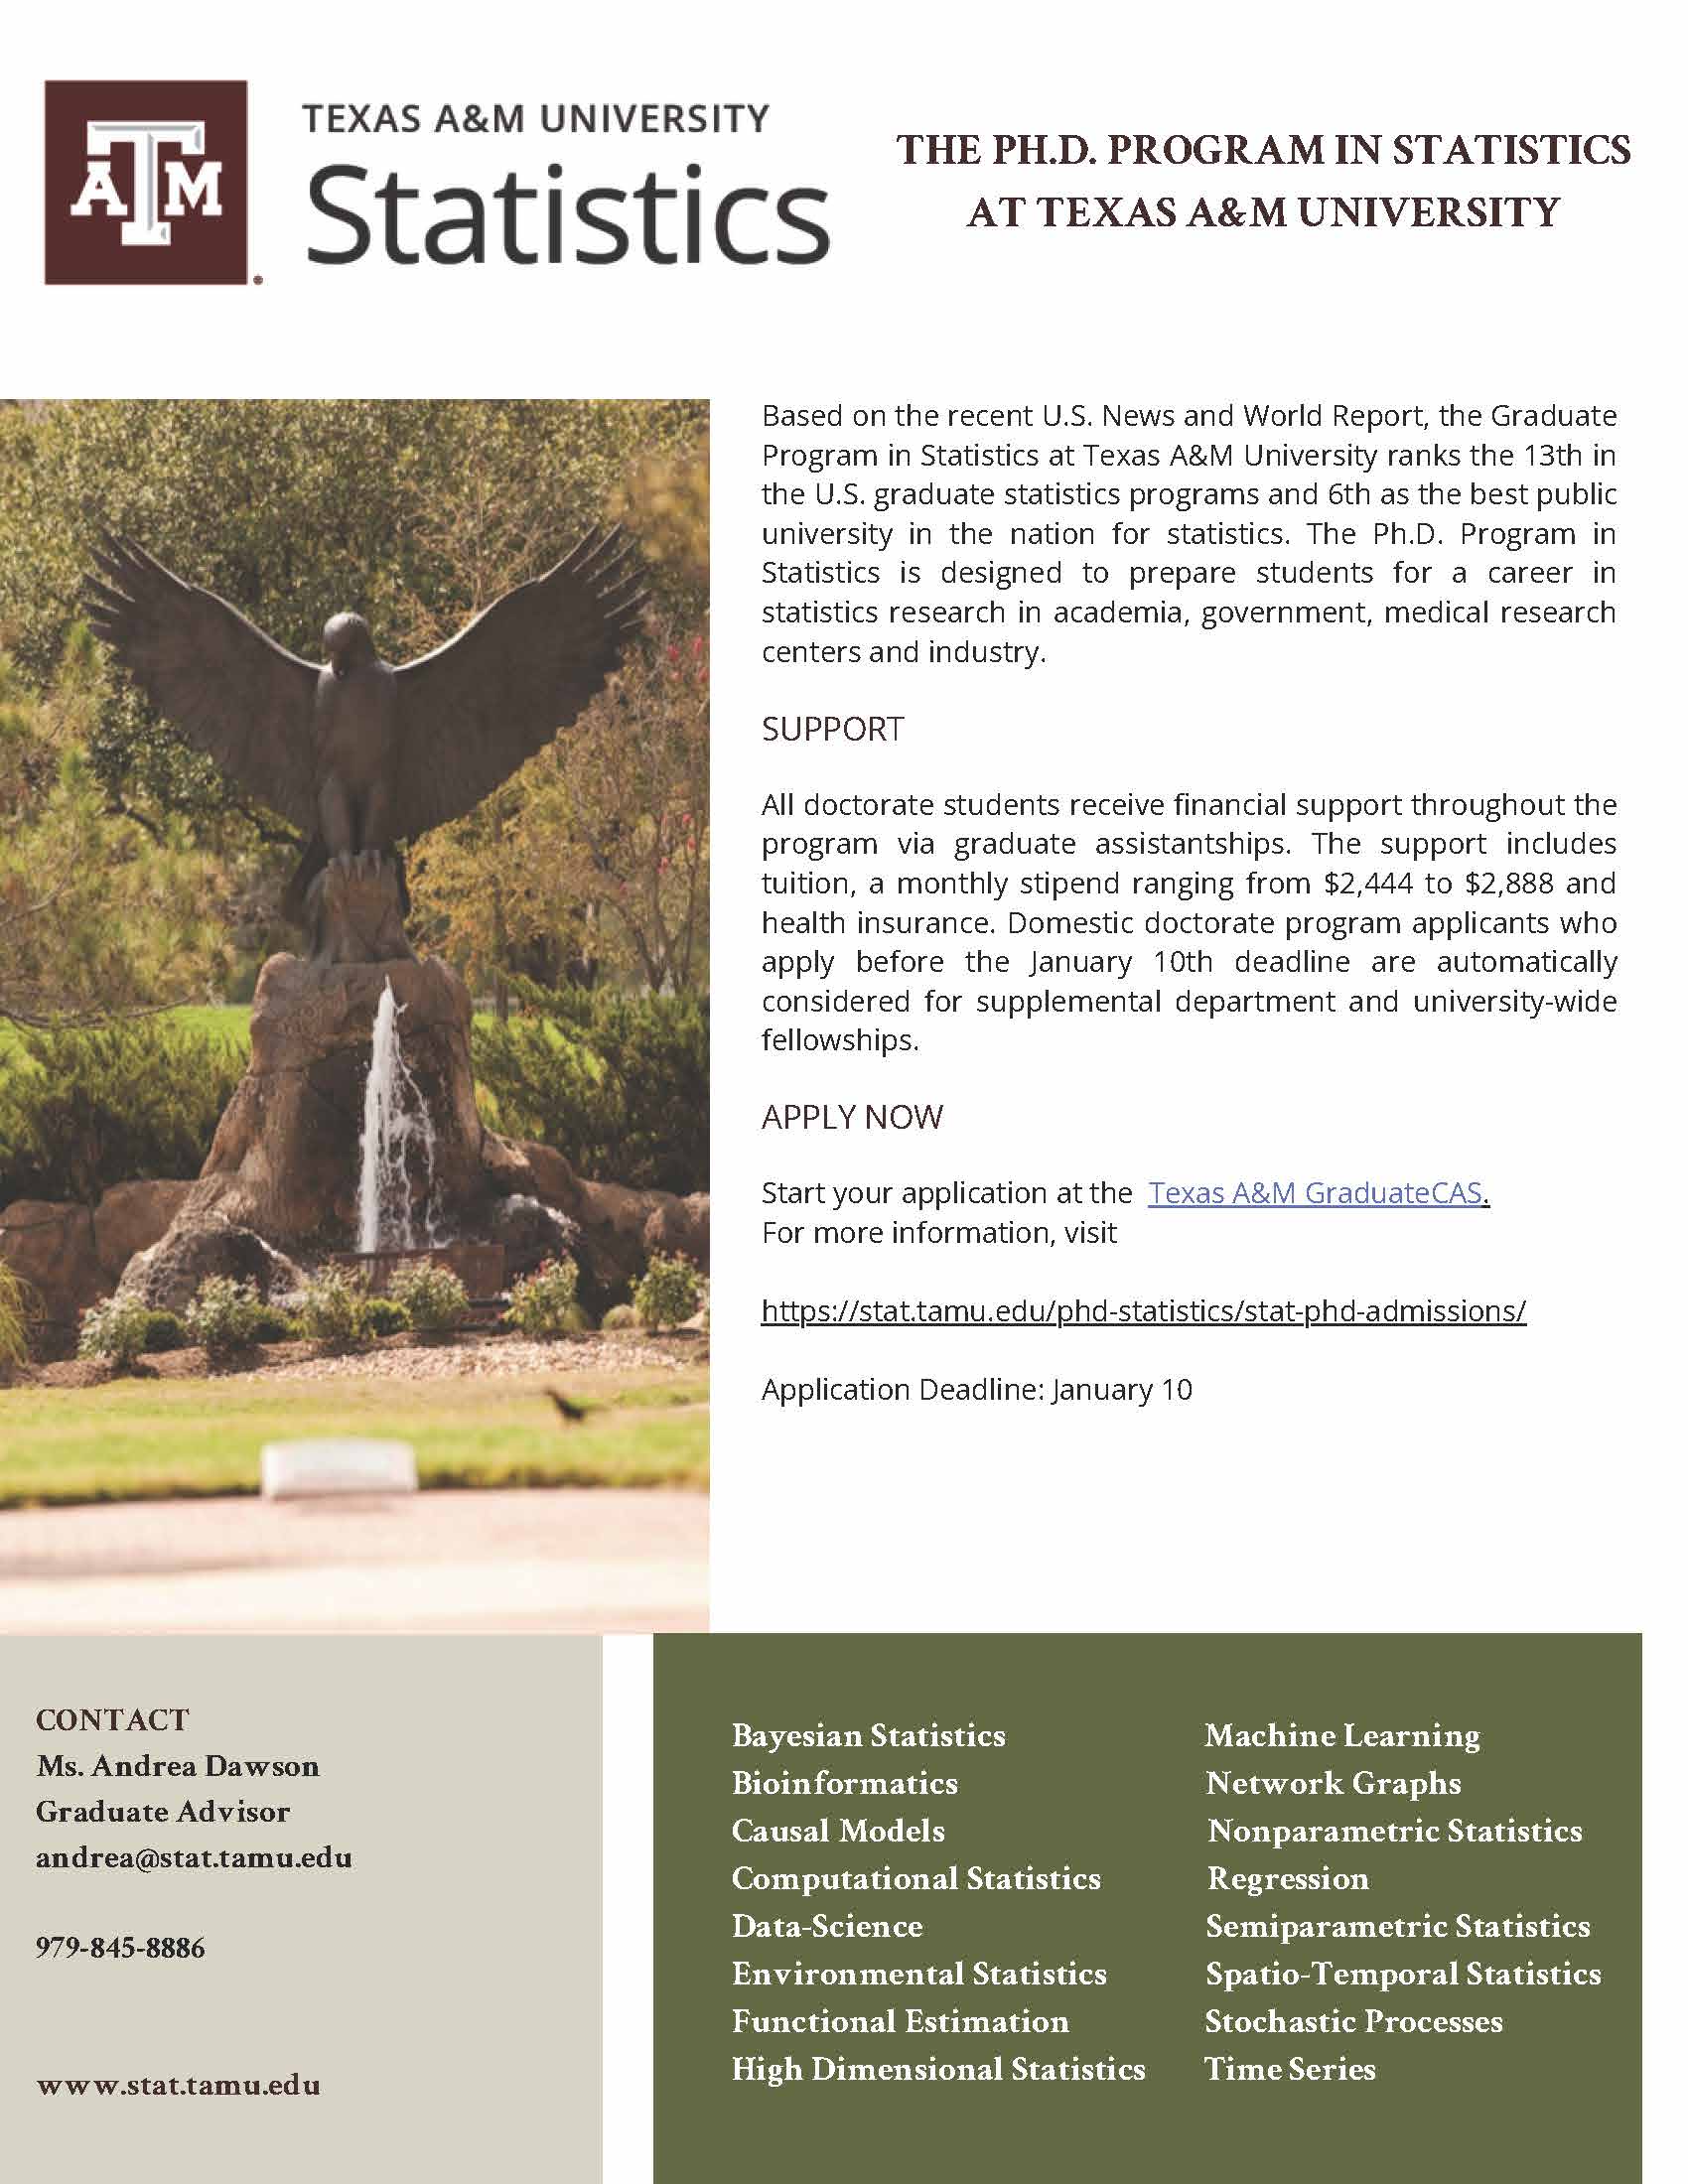 The Ph.D. Program in Statistics as Texas A&M University